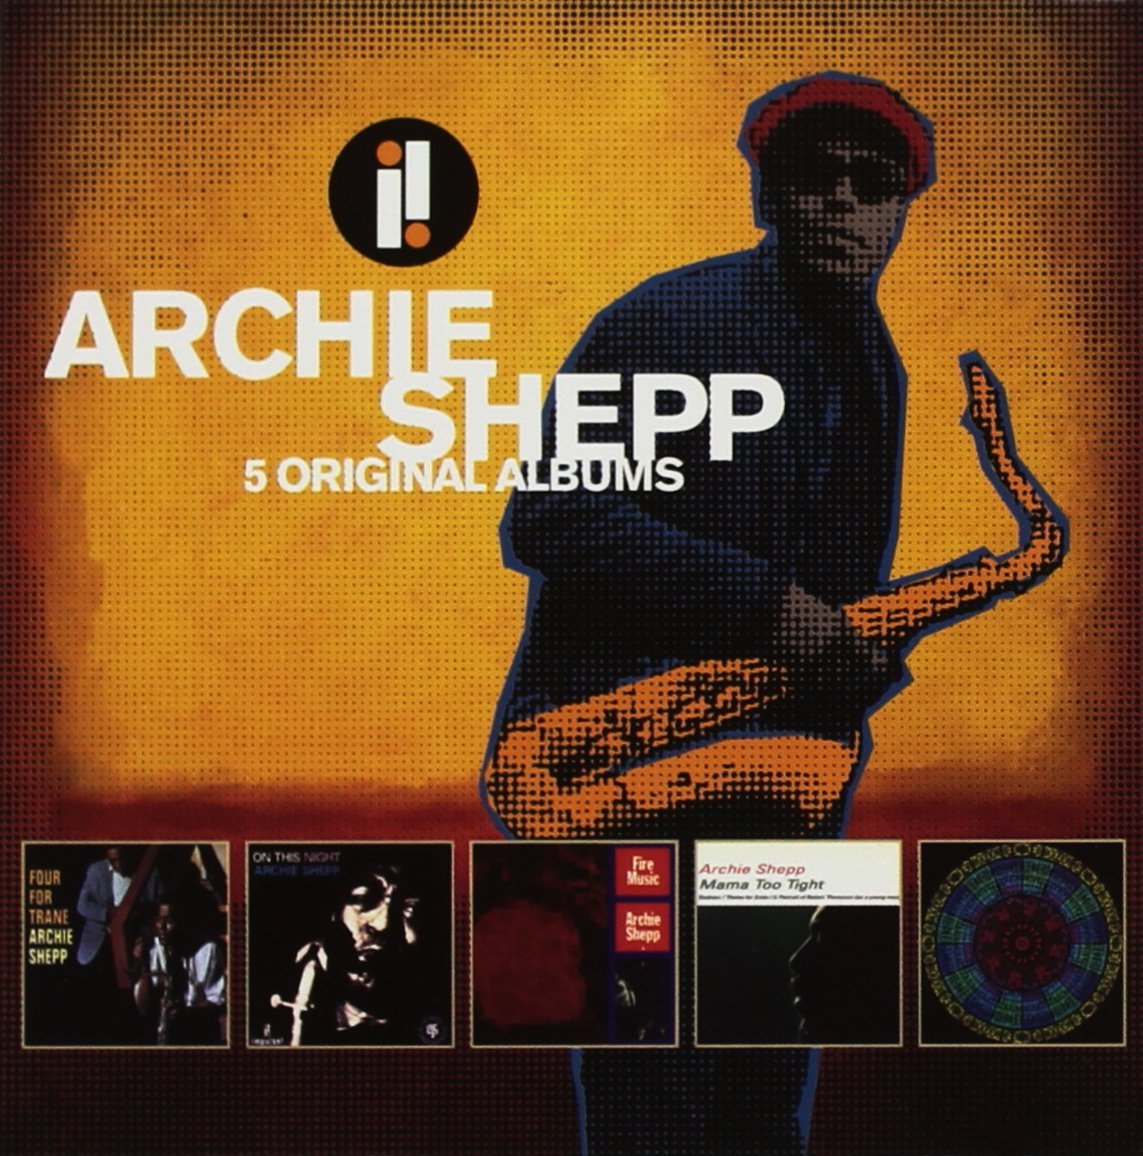 http://www.jazzmusicarchives.com/images/covers/archie-shepp-5-original-albums(compilation)-20180620021641.jpg